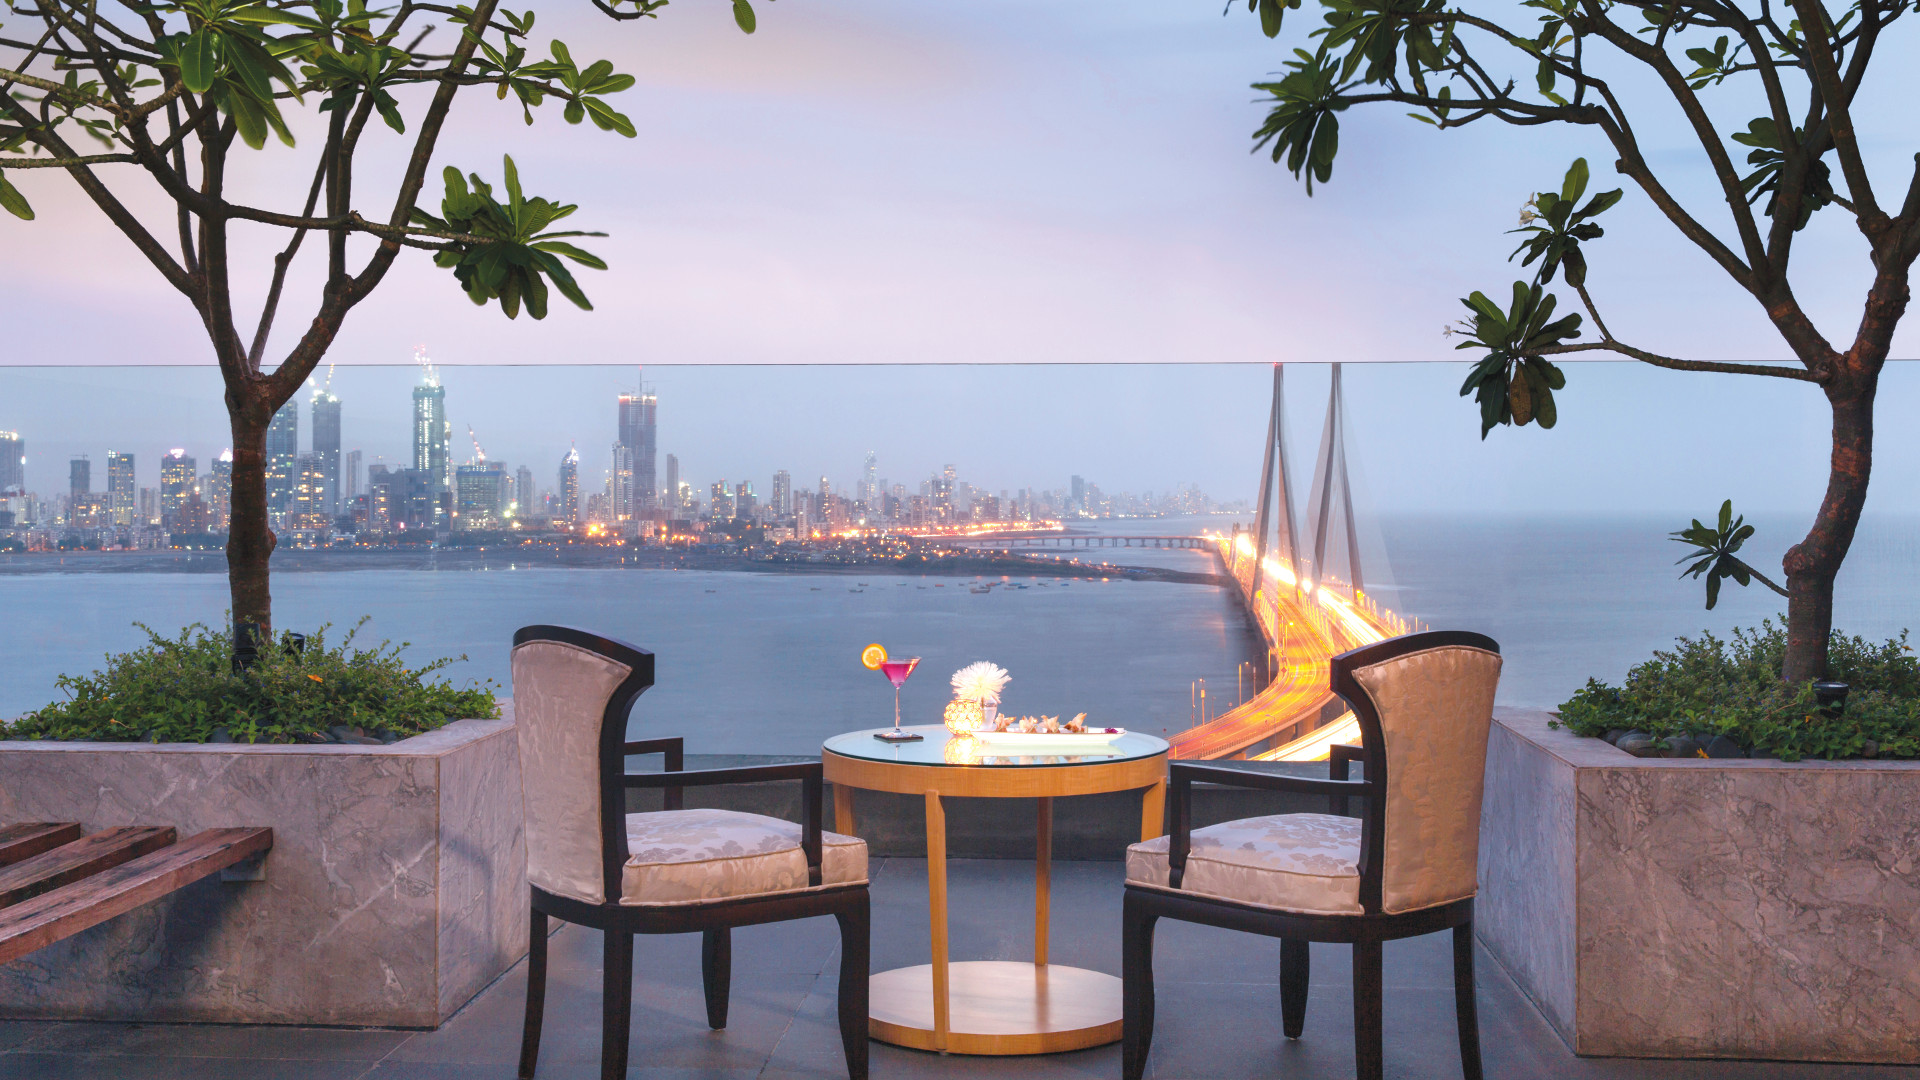 The Chambers at Taj Lands End, Mumbai, overlooking the city's famous Bandra-Worli Sealink